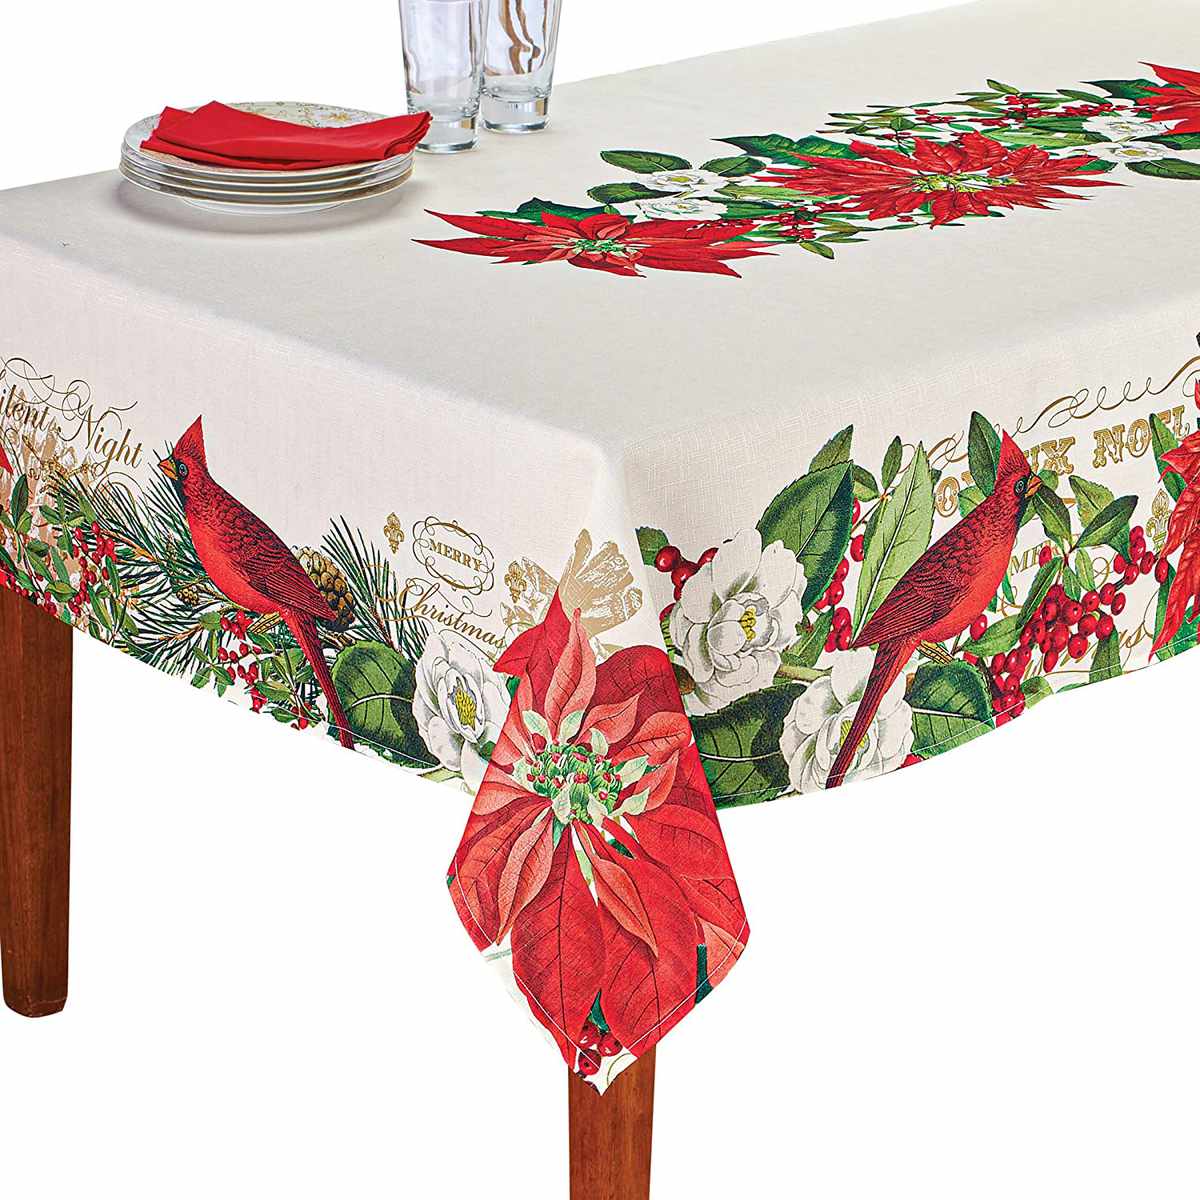 Christmas Tablecloth Print Rectangle Table Cover Holiday Party Home Decor USA 